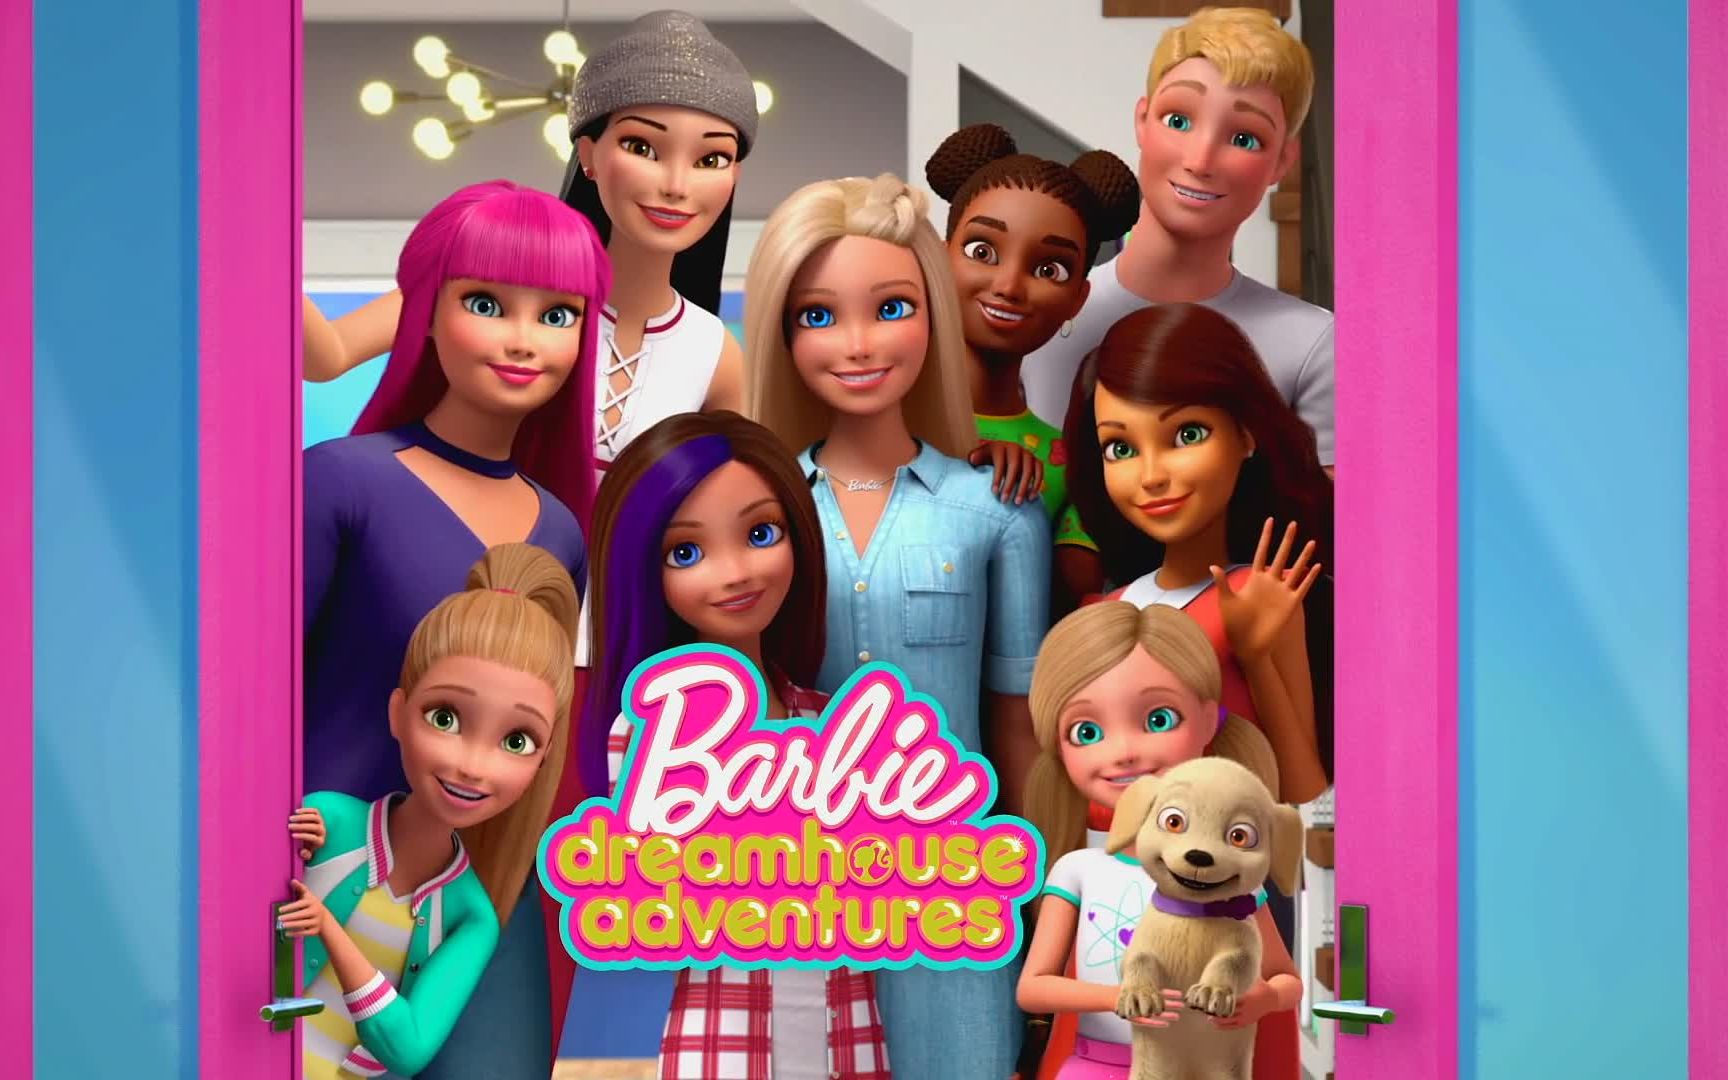 Free Download Barbie Life in The Dreamhouse Background | PixelsTalk.Net